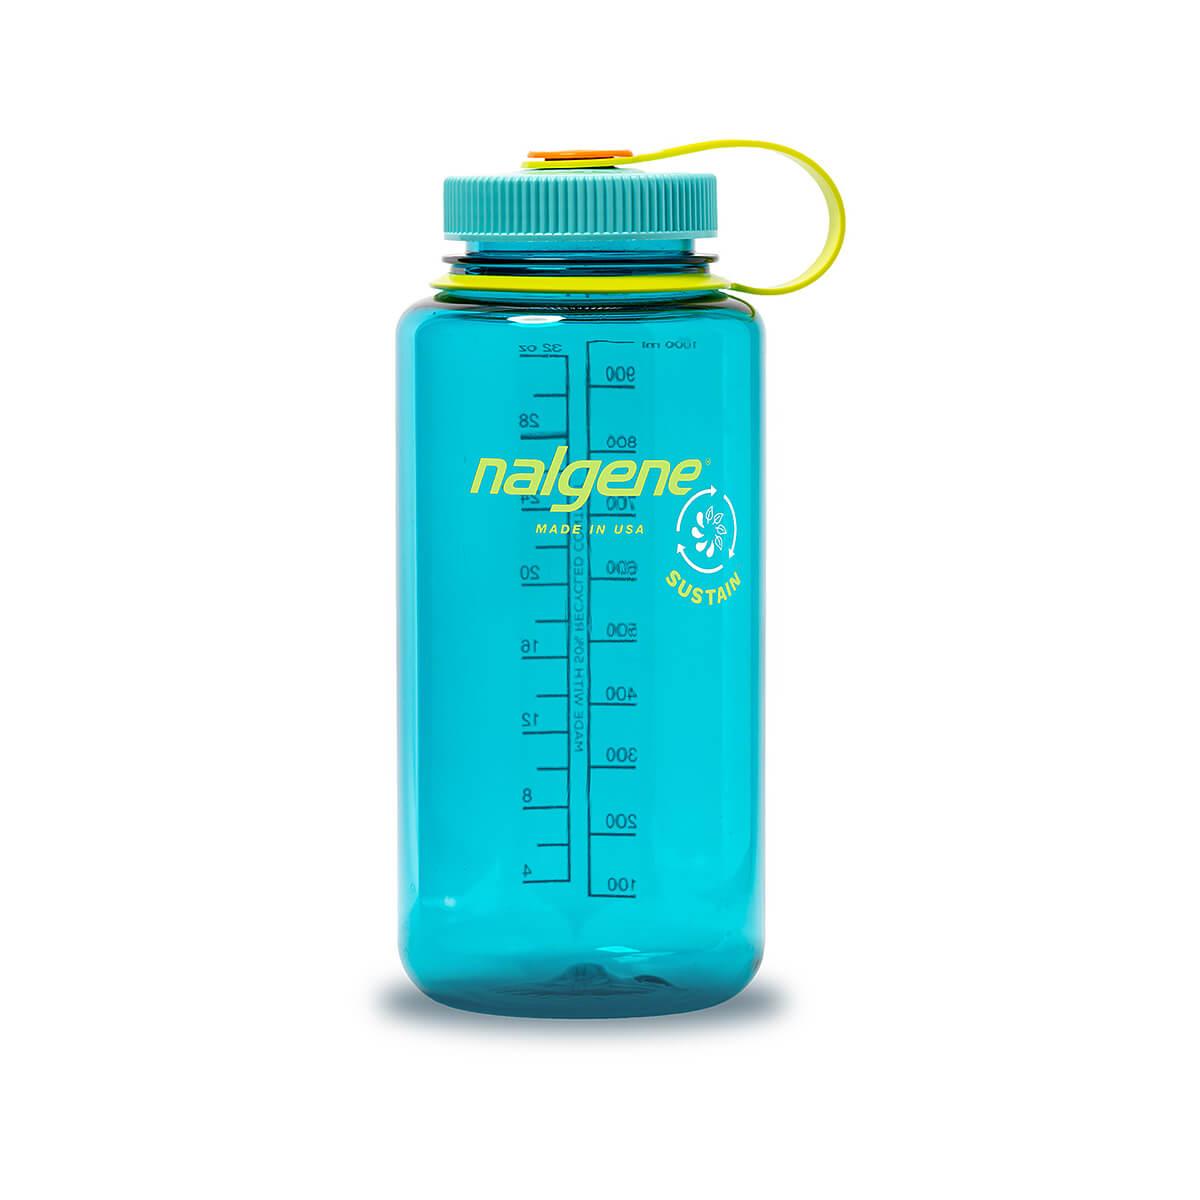 Iron Flask Sports Water Bottle - 3 Lids - 40 oz - Fire Red